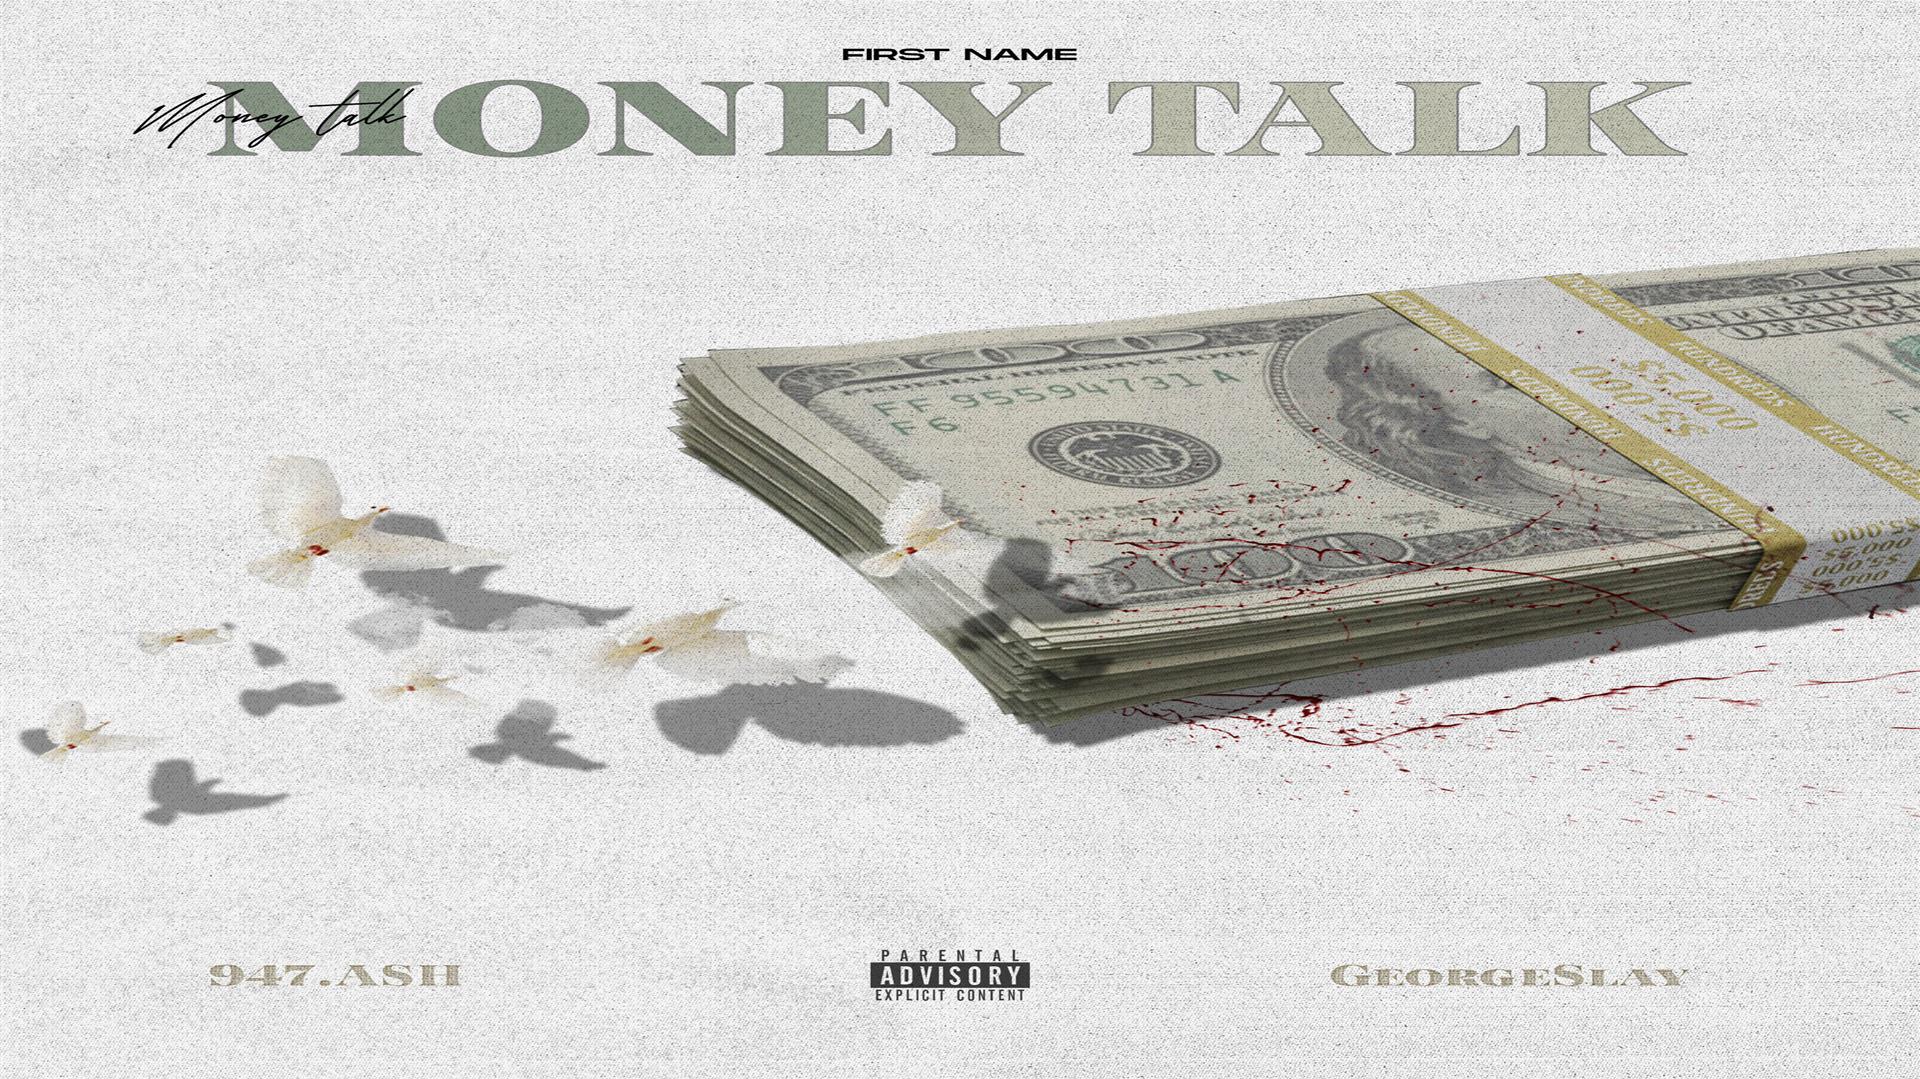 947.ASH - Money talk